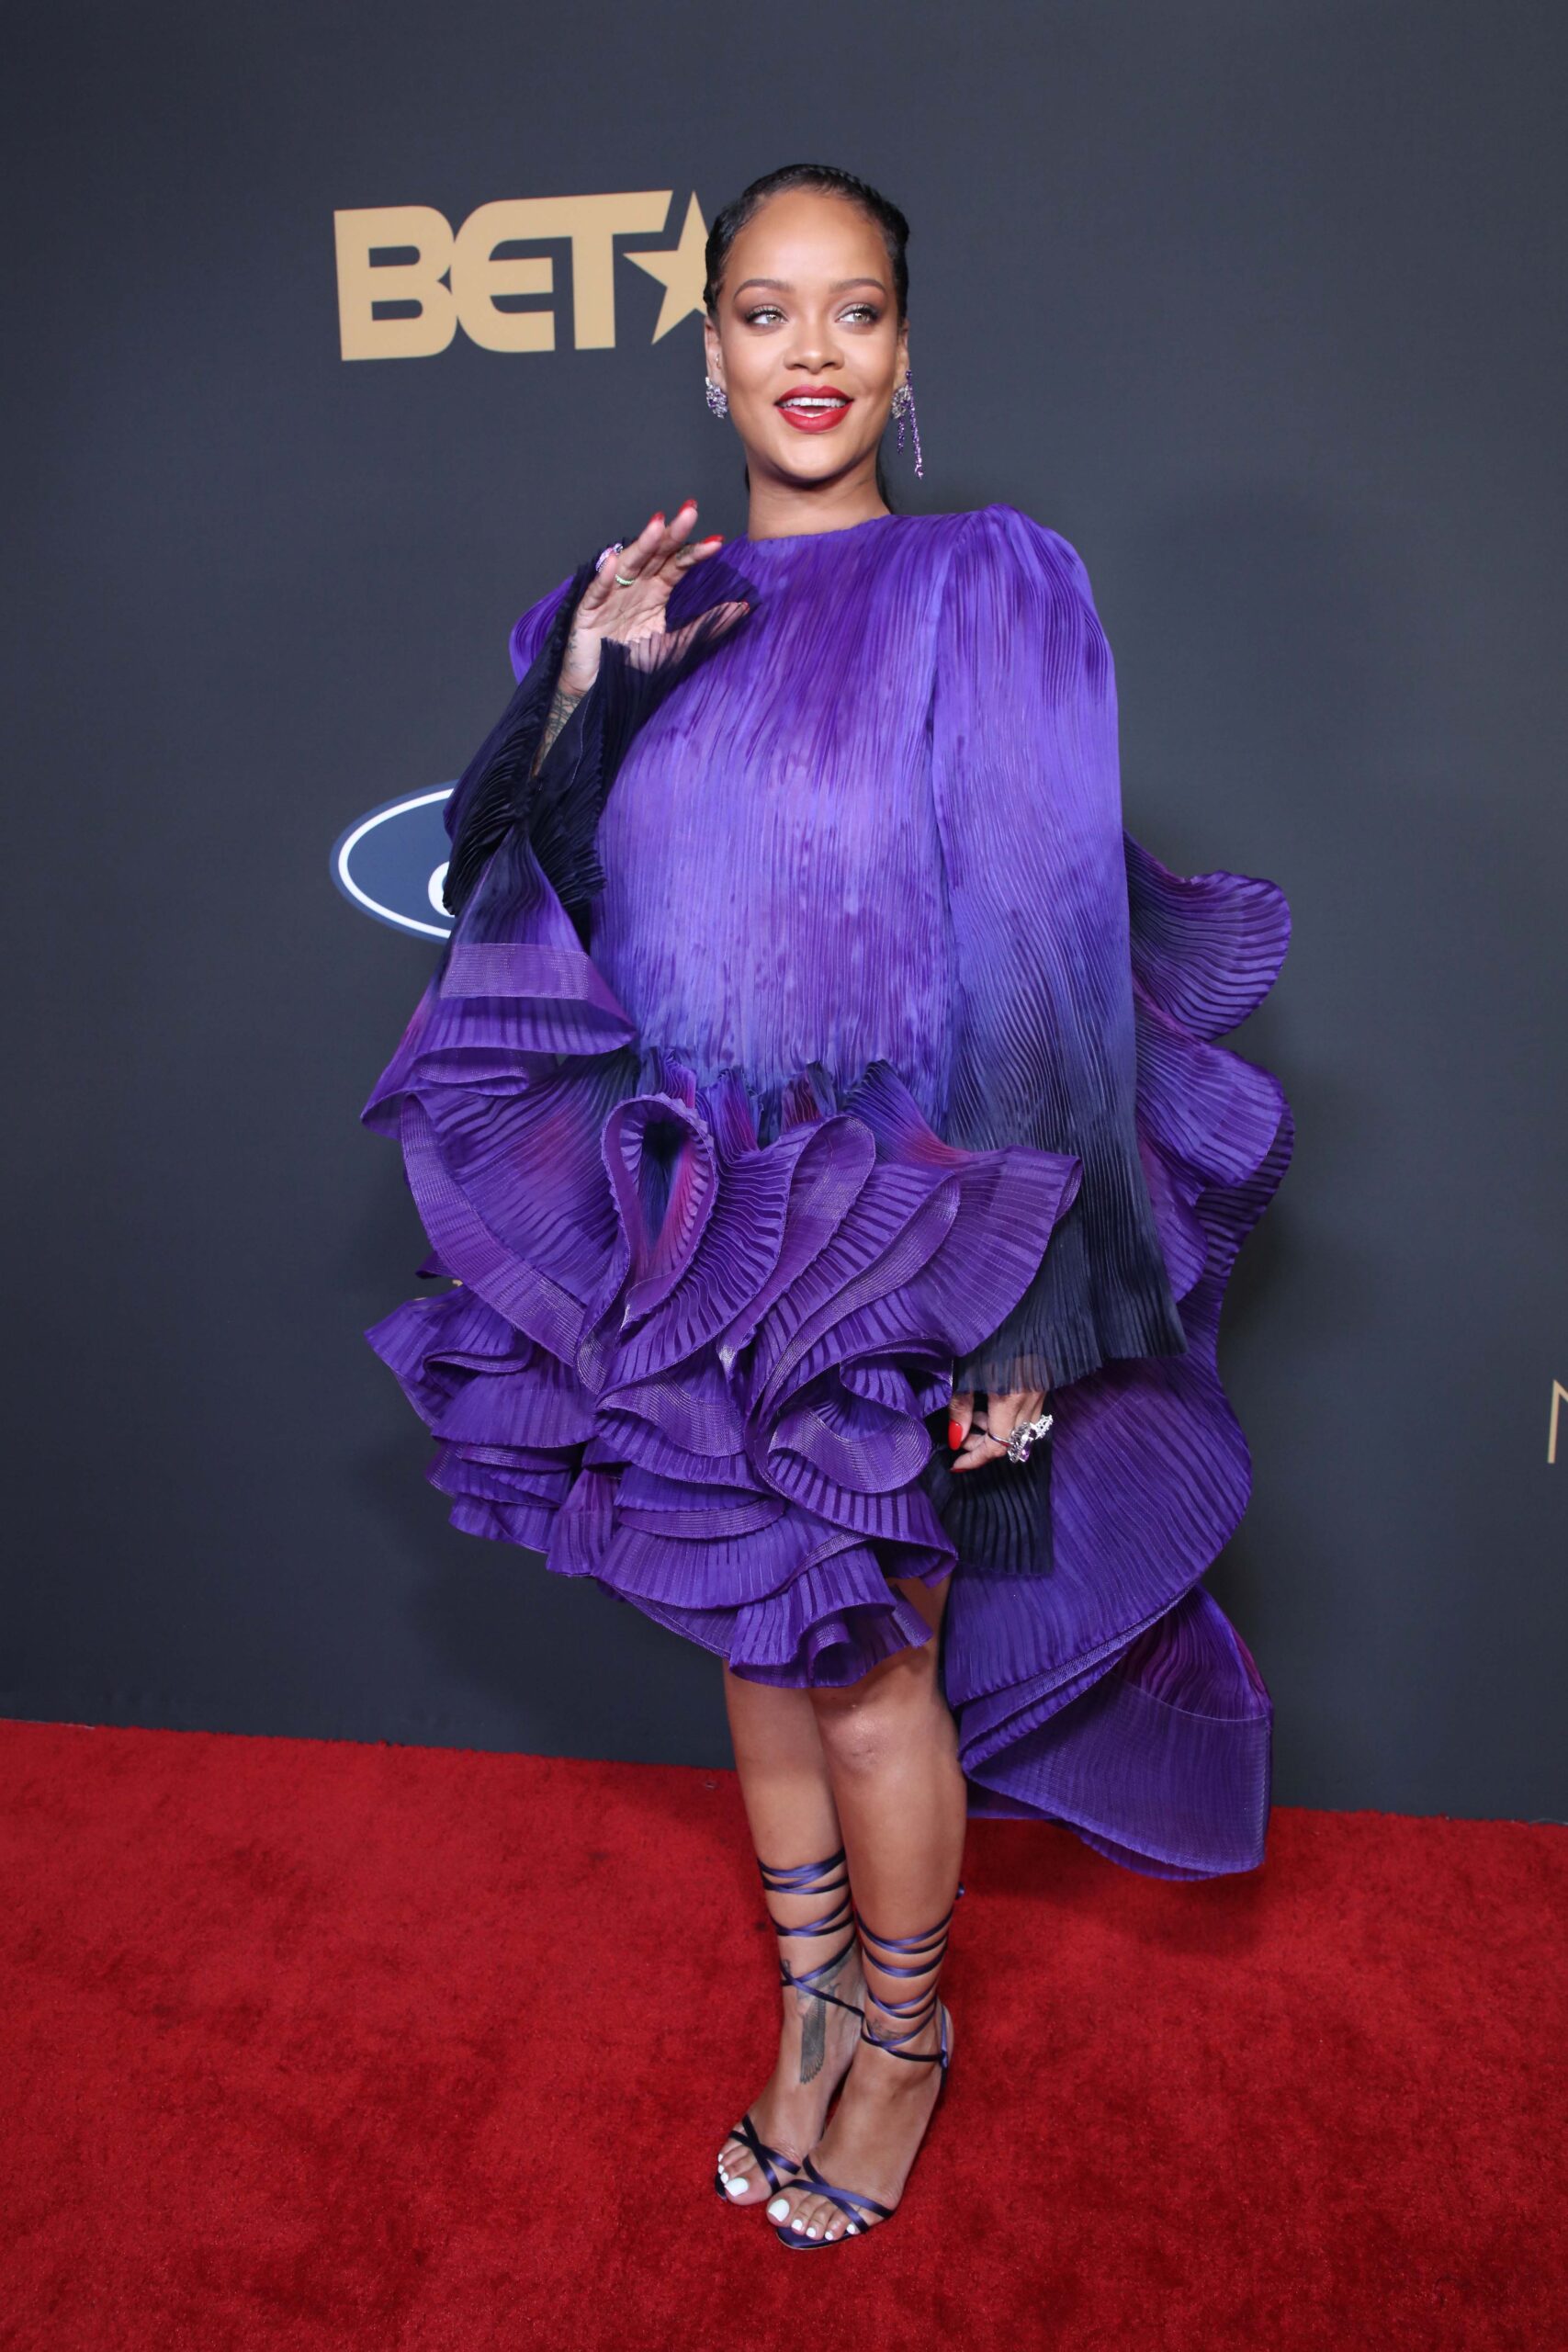 Rihanna on the red carpet wearing a purple dress